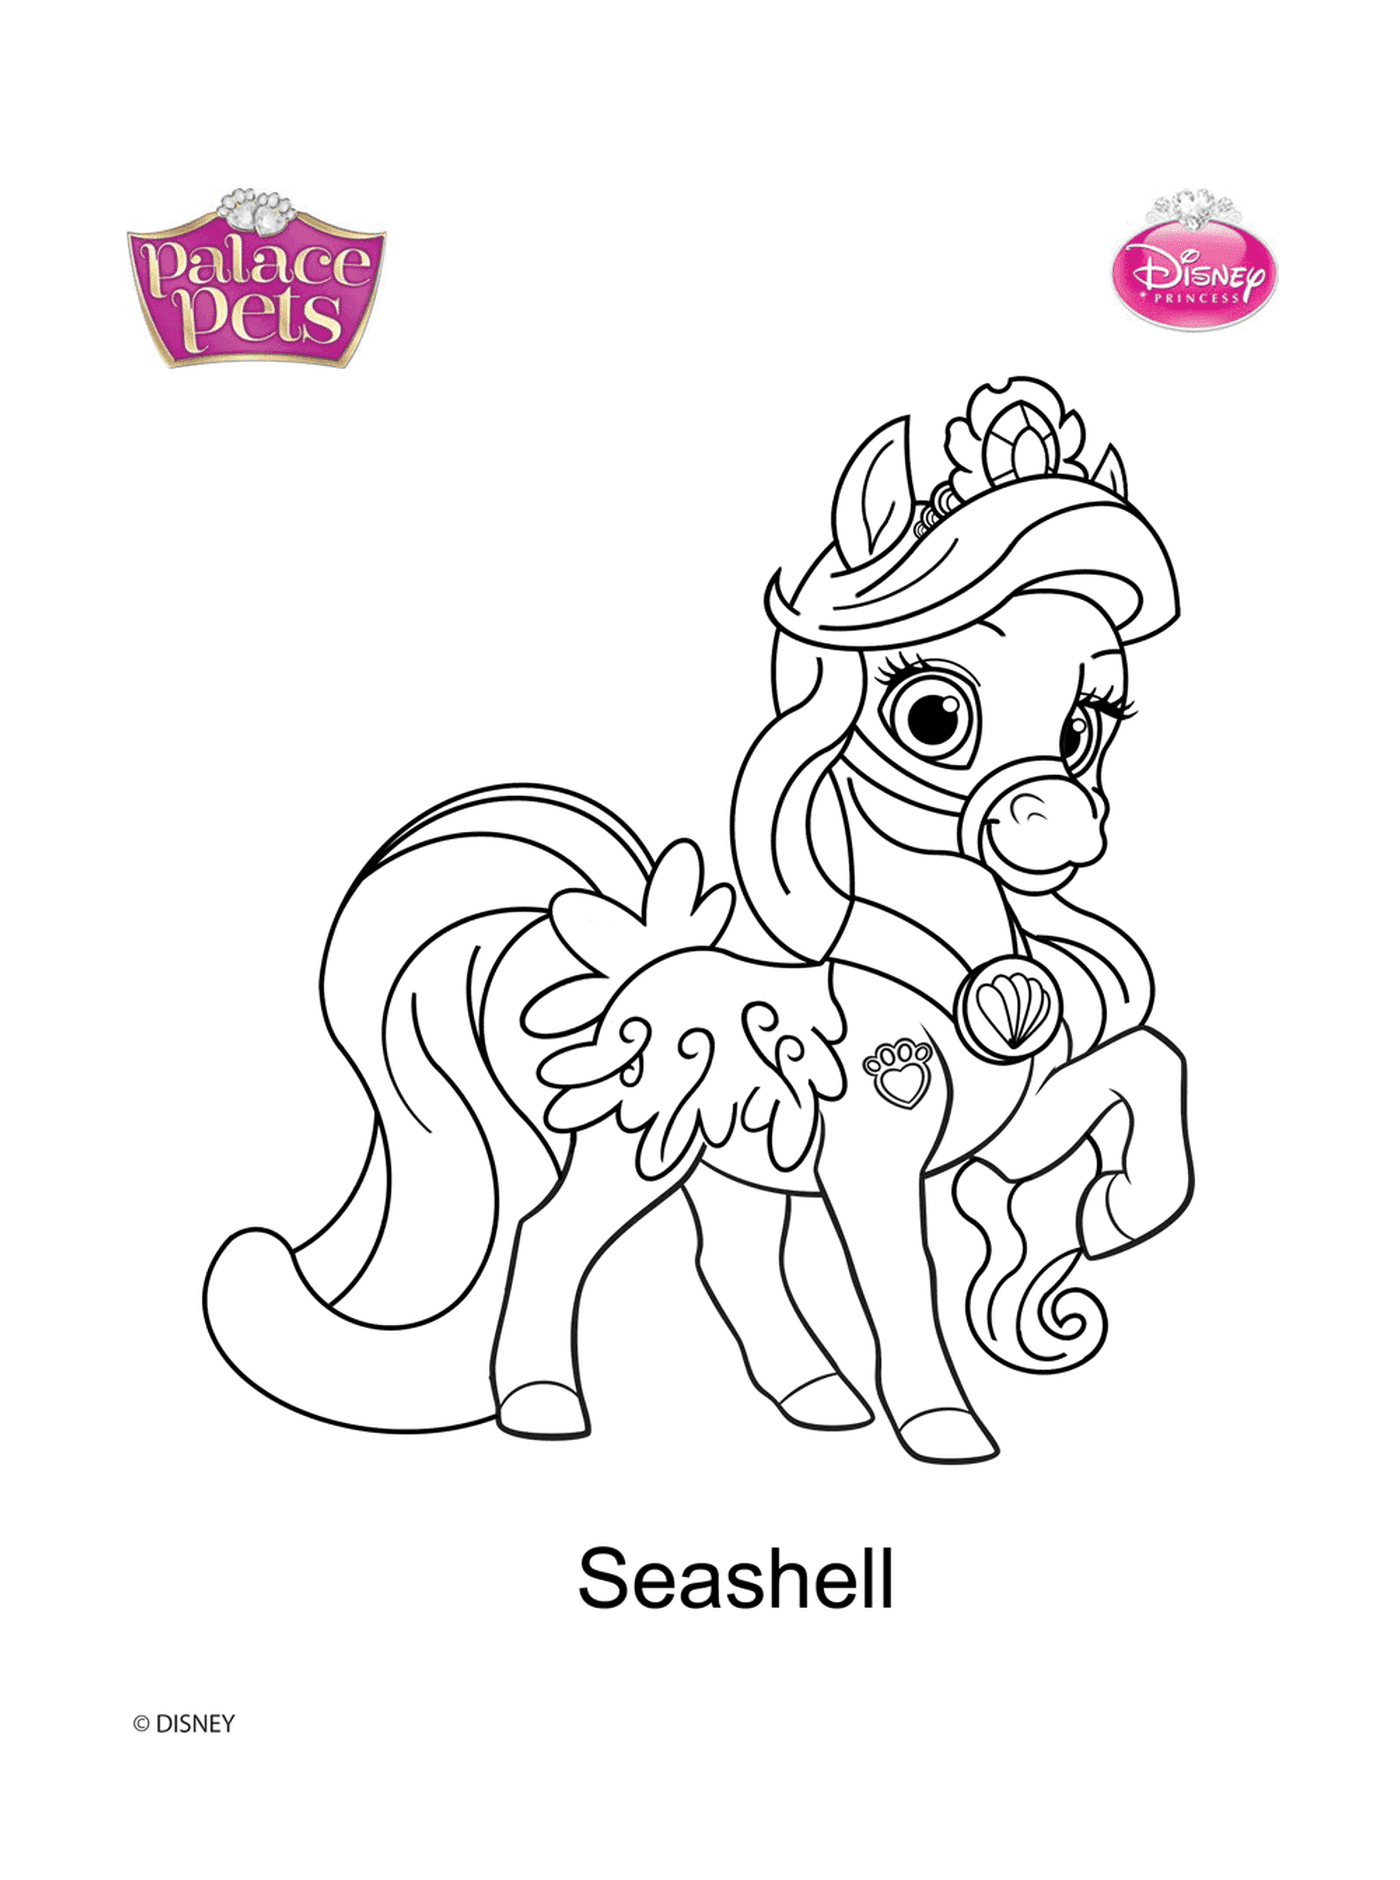   Palace pets, Seashell la princesse poney 